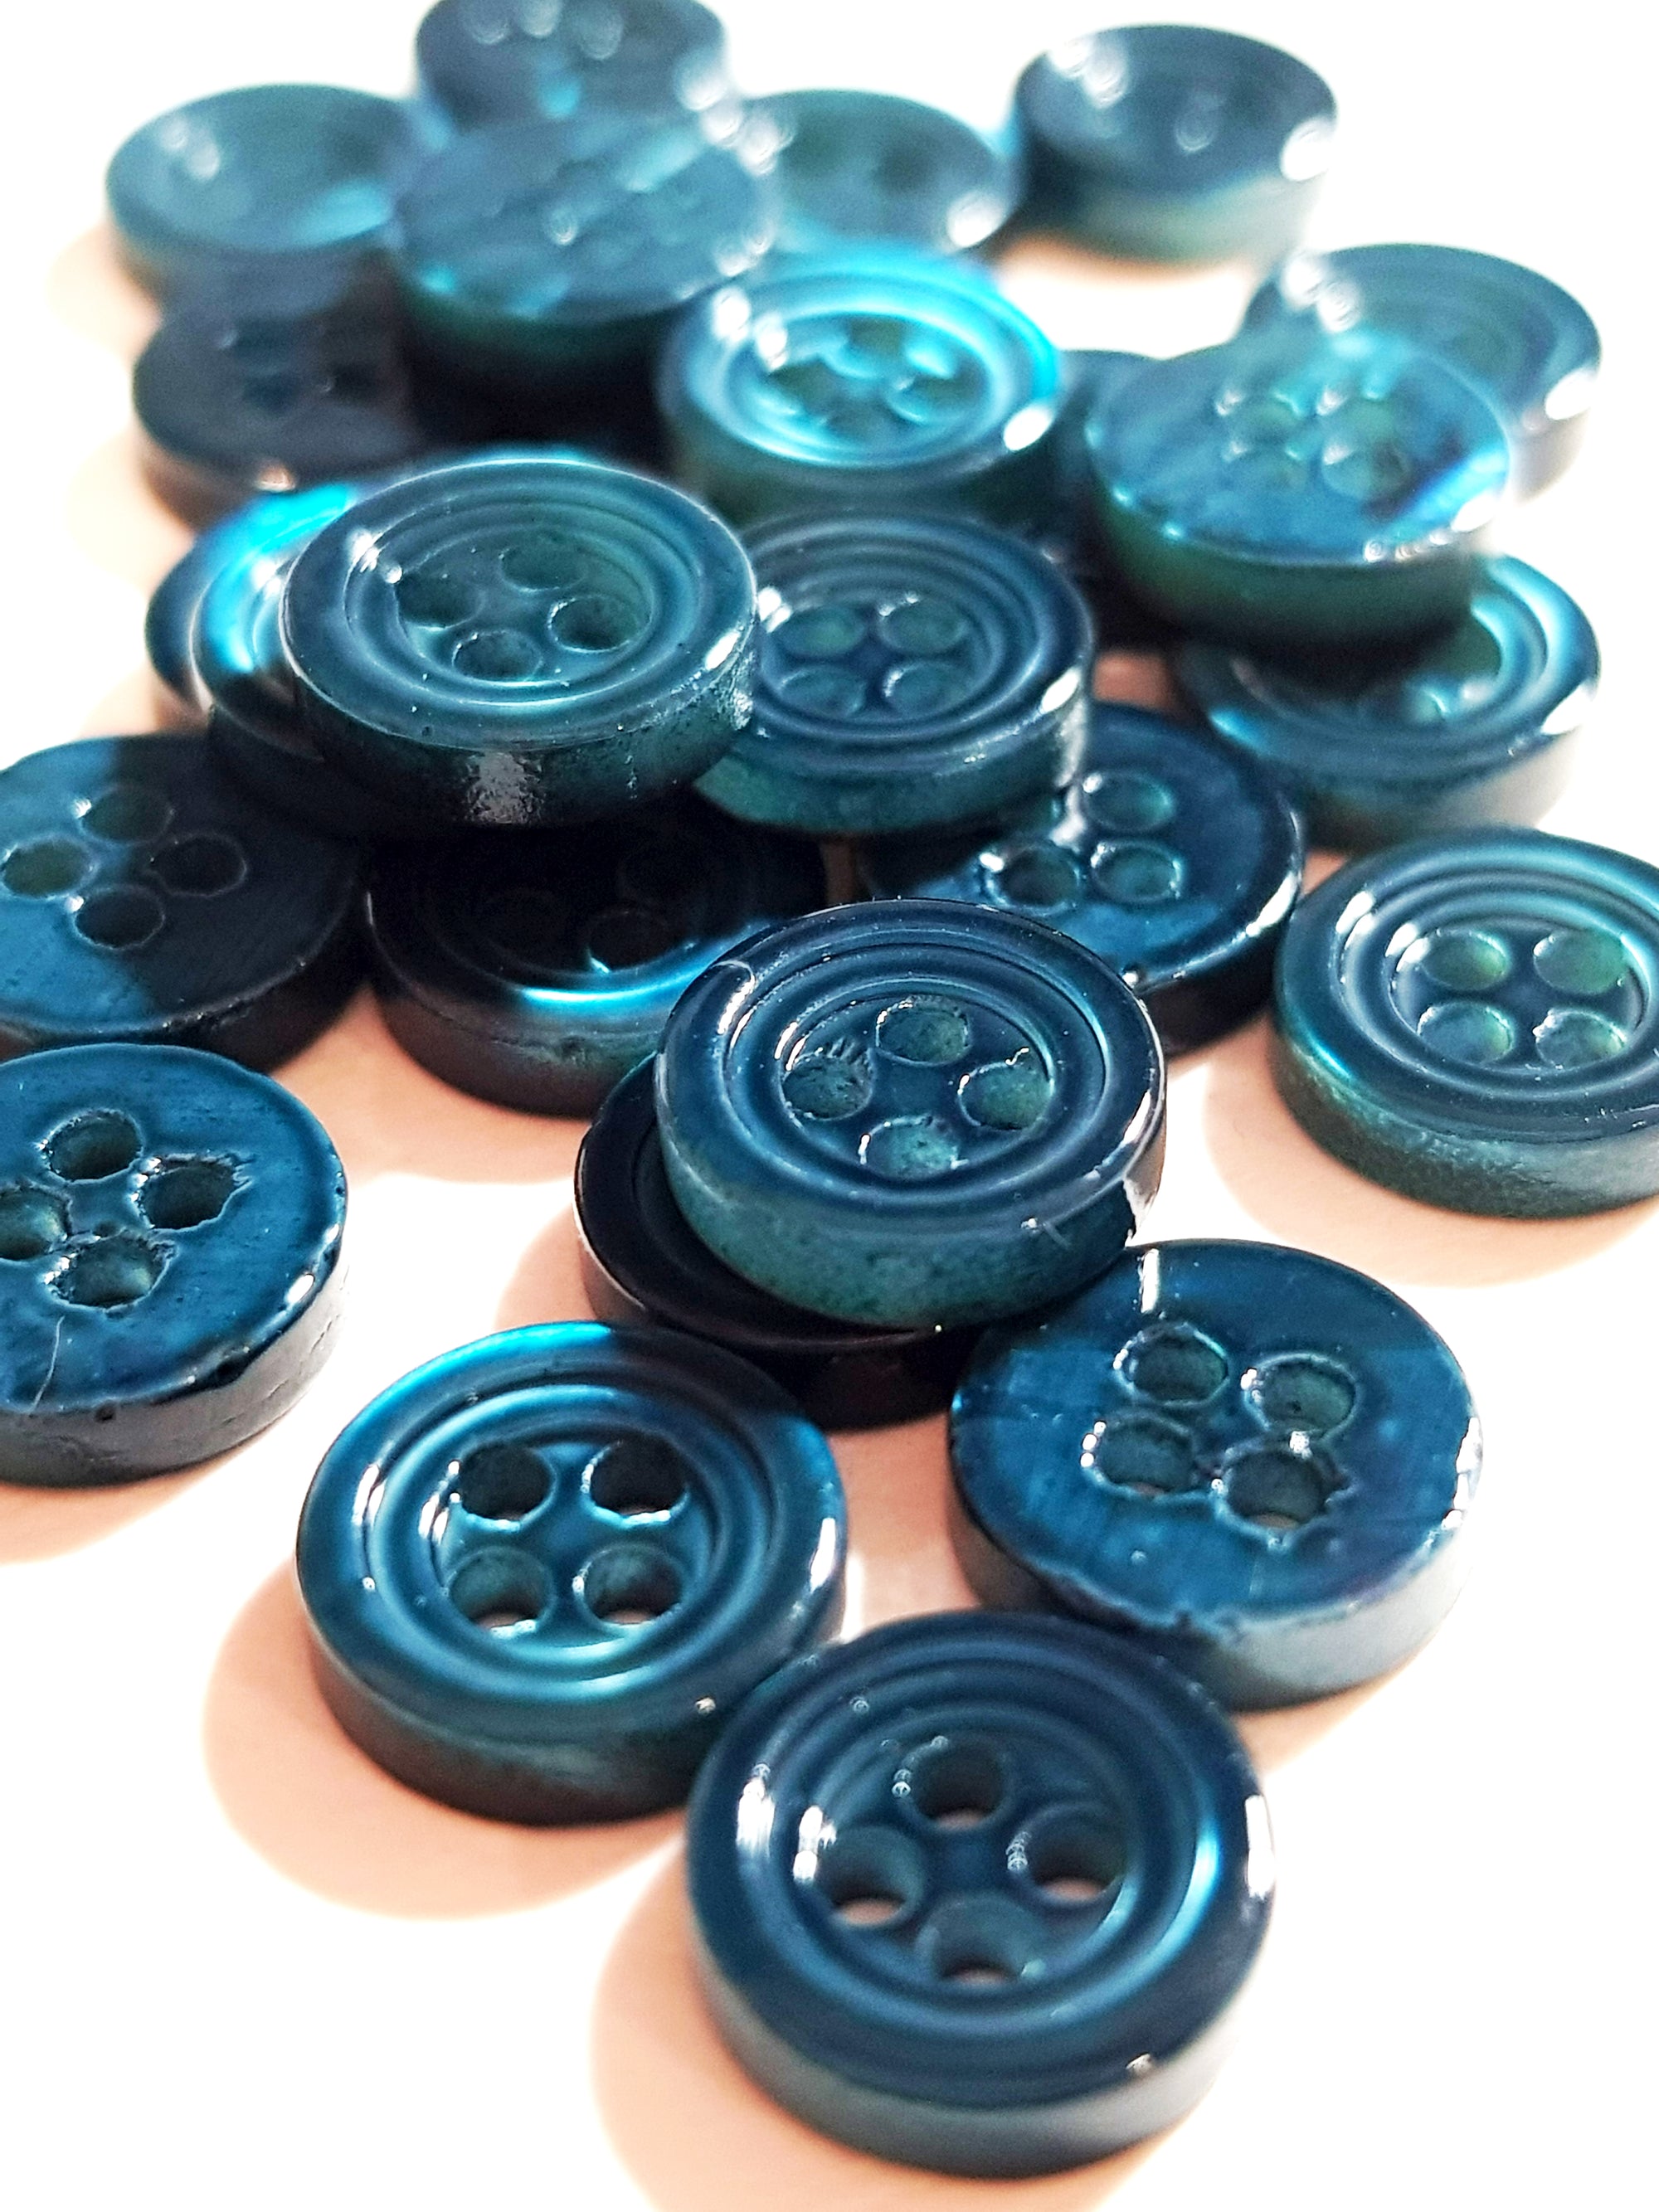 SP02/GR HUBERROSS Teal Green Colored Trocus Shell Buttons